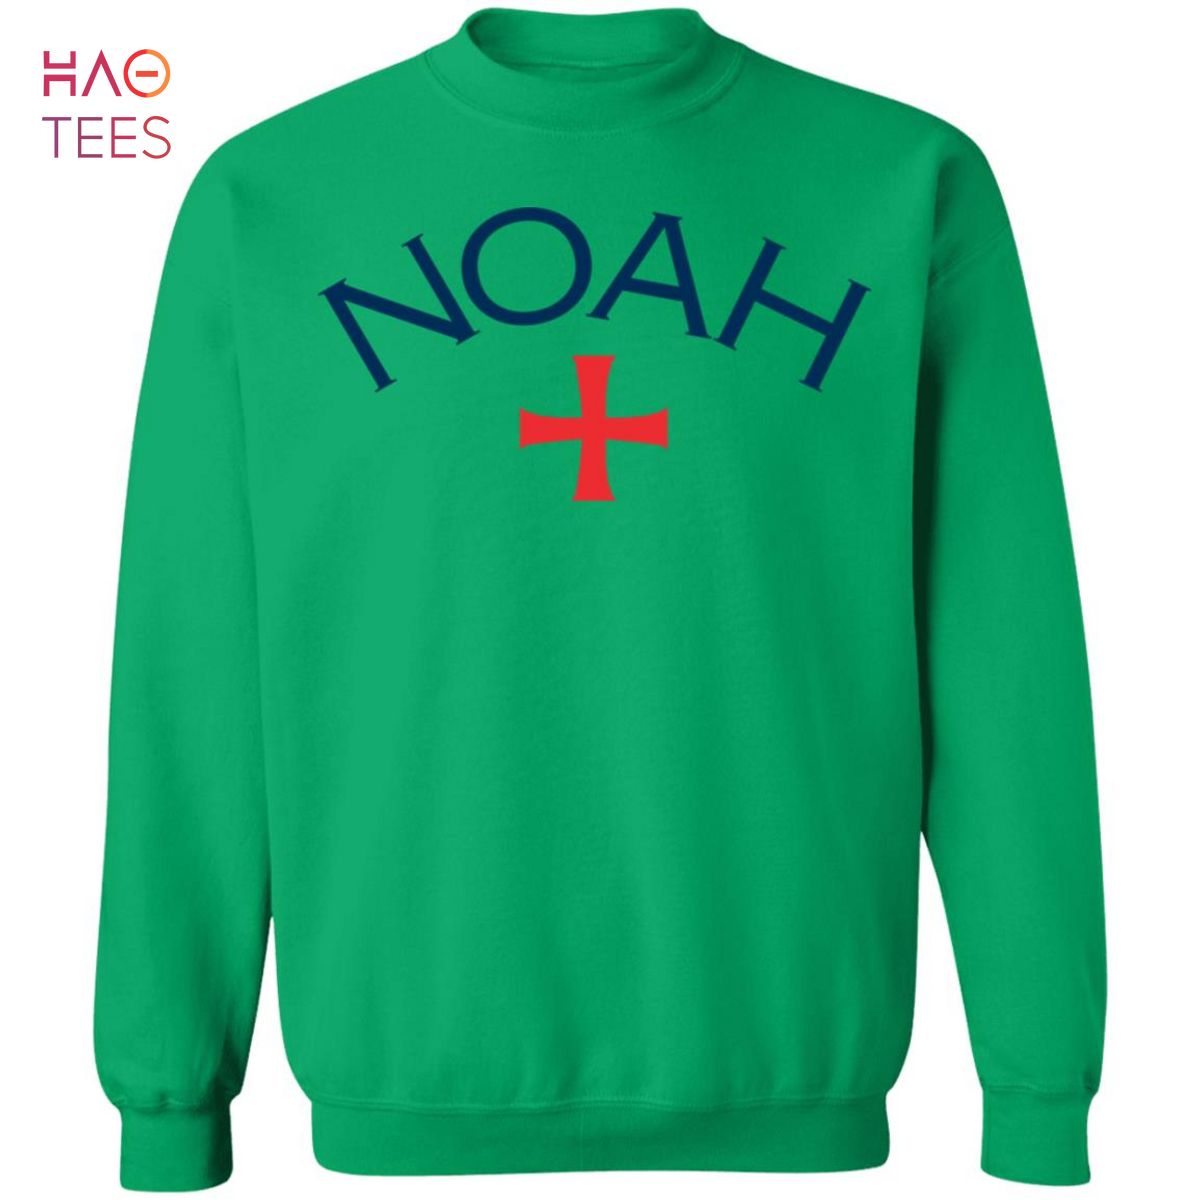 [NEW] Noah Sweater